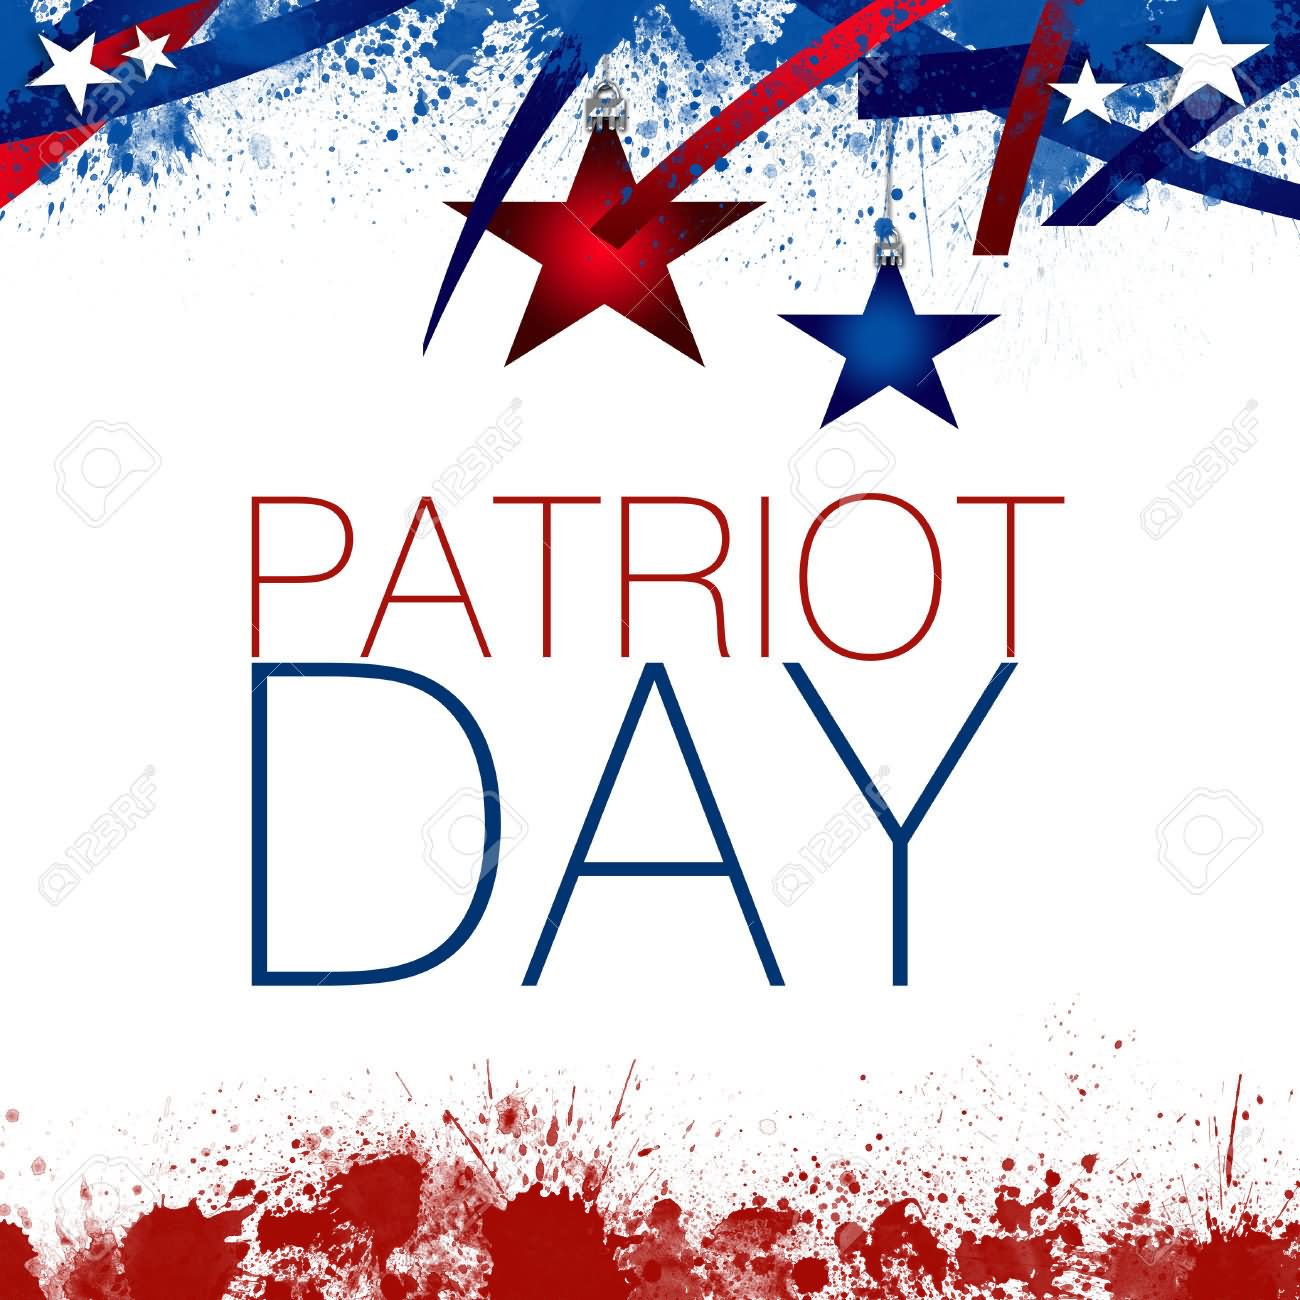 Patriot Day Greetings